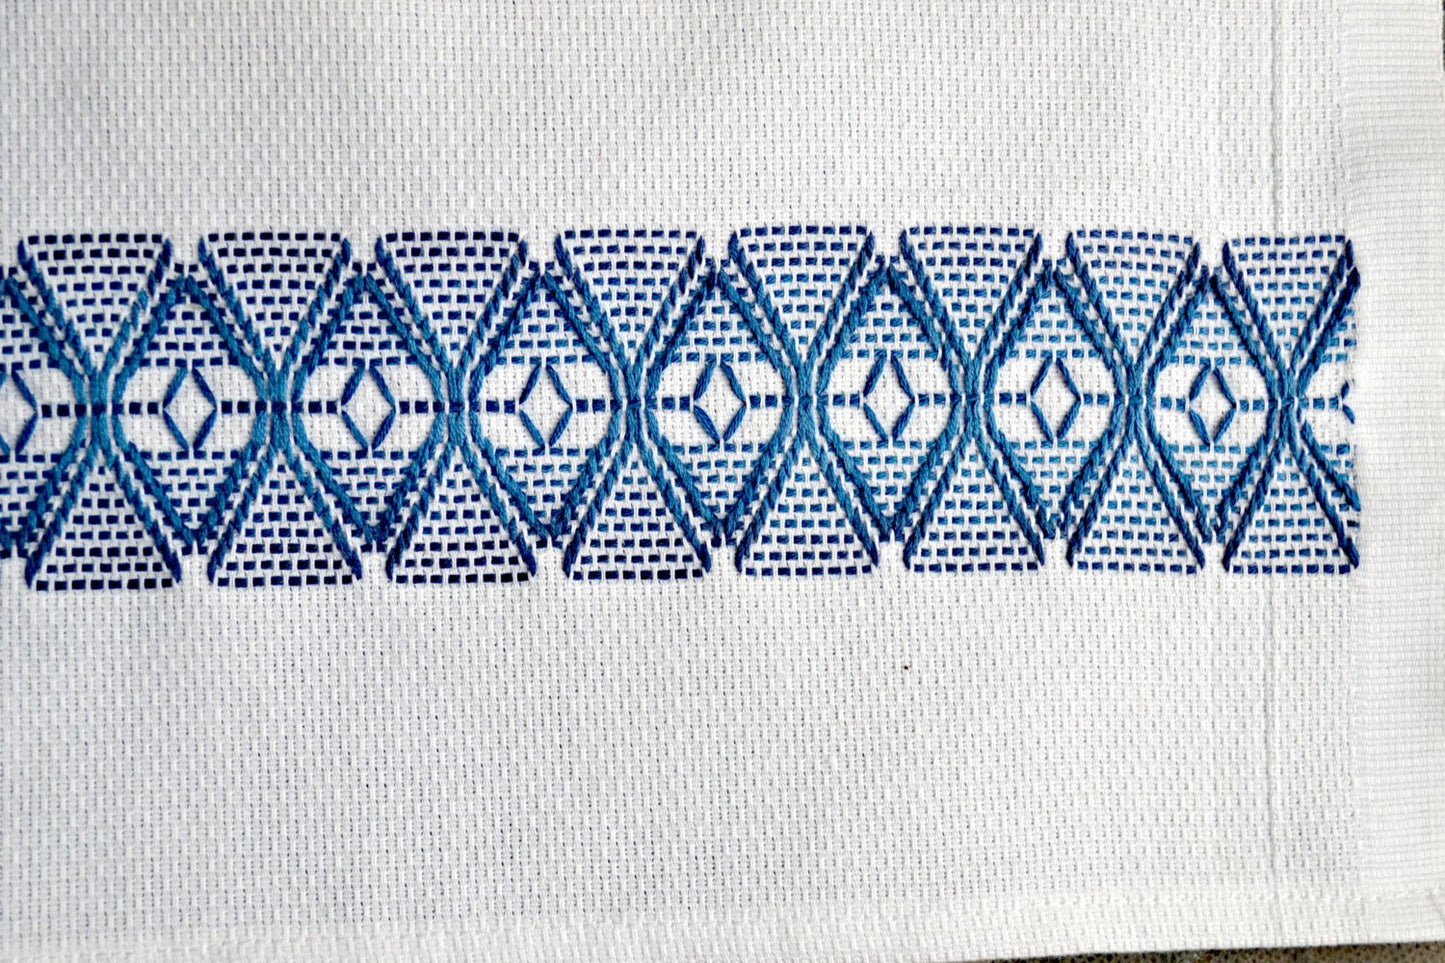 Hand Stitched Tea Towel in Indigo Blues